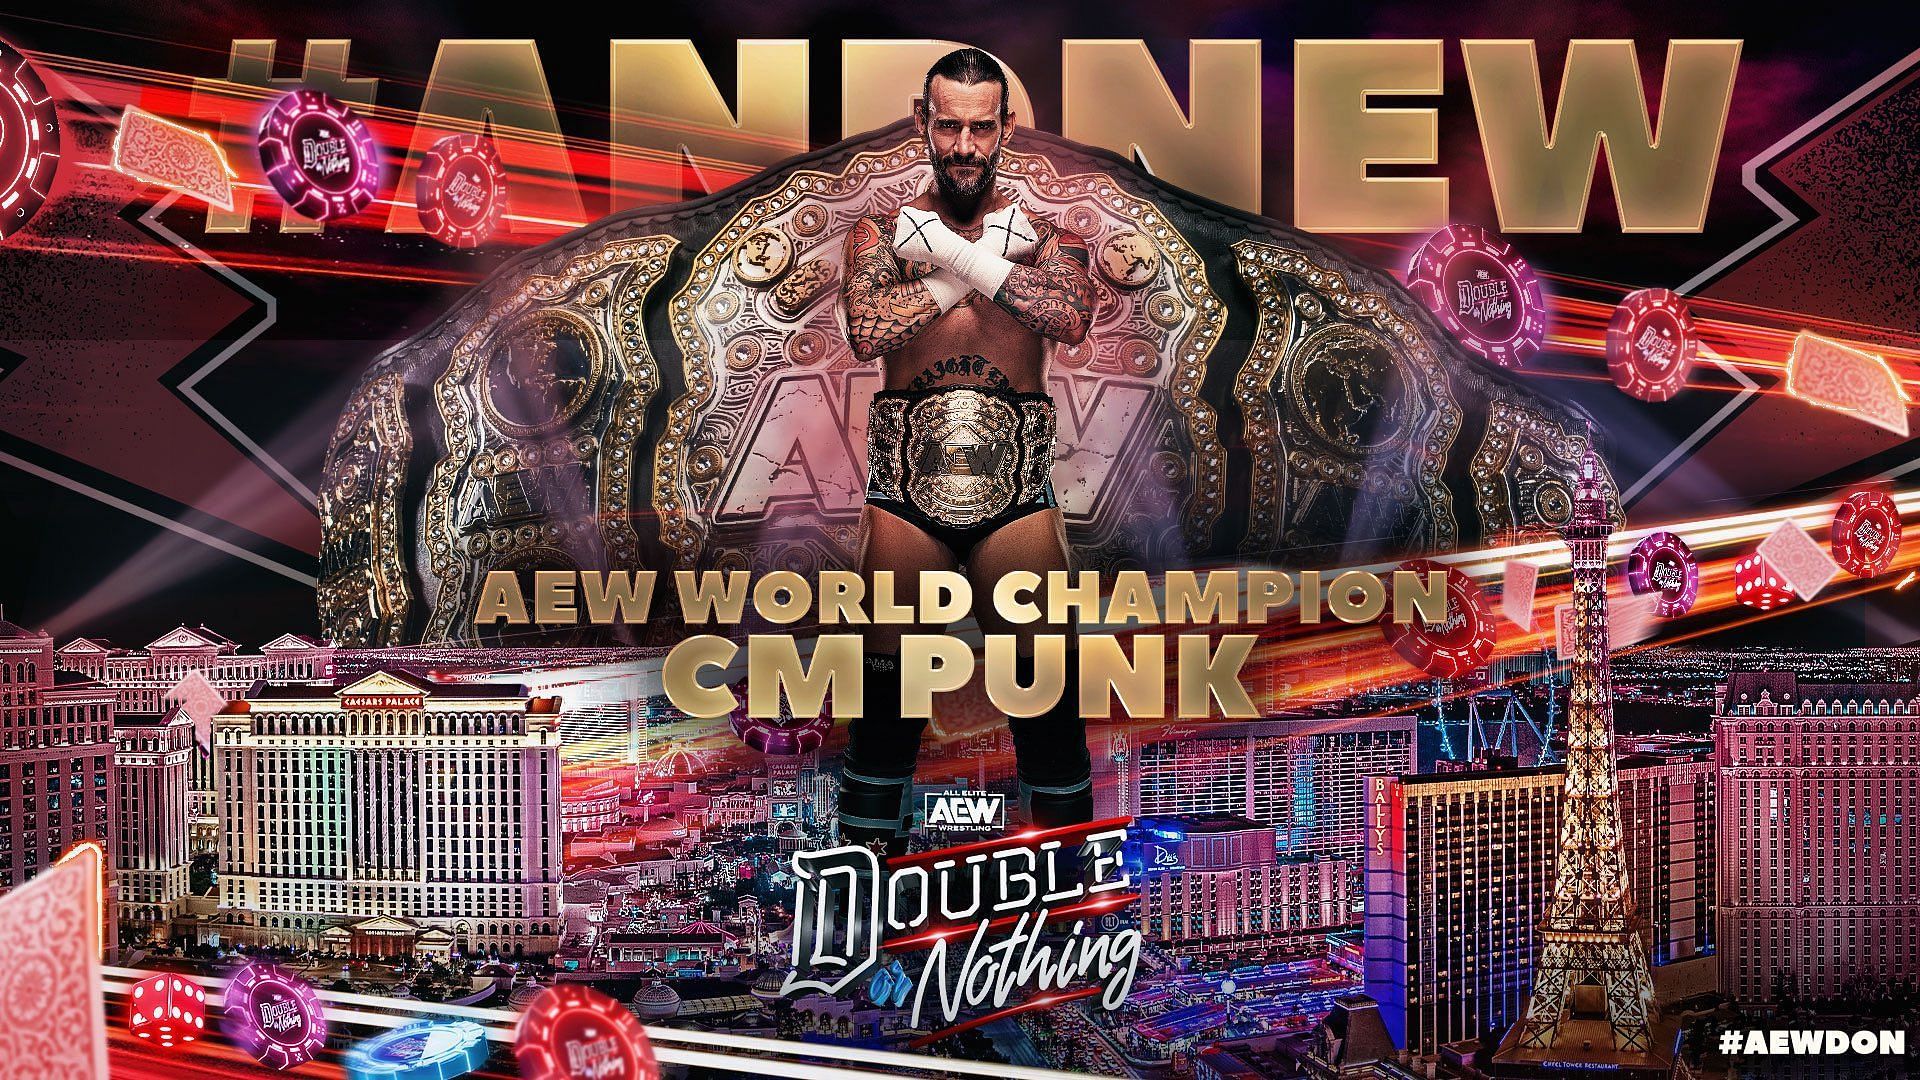 CM Punk is the new AEW World Champion